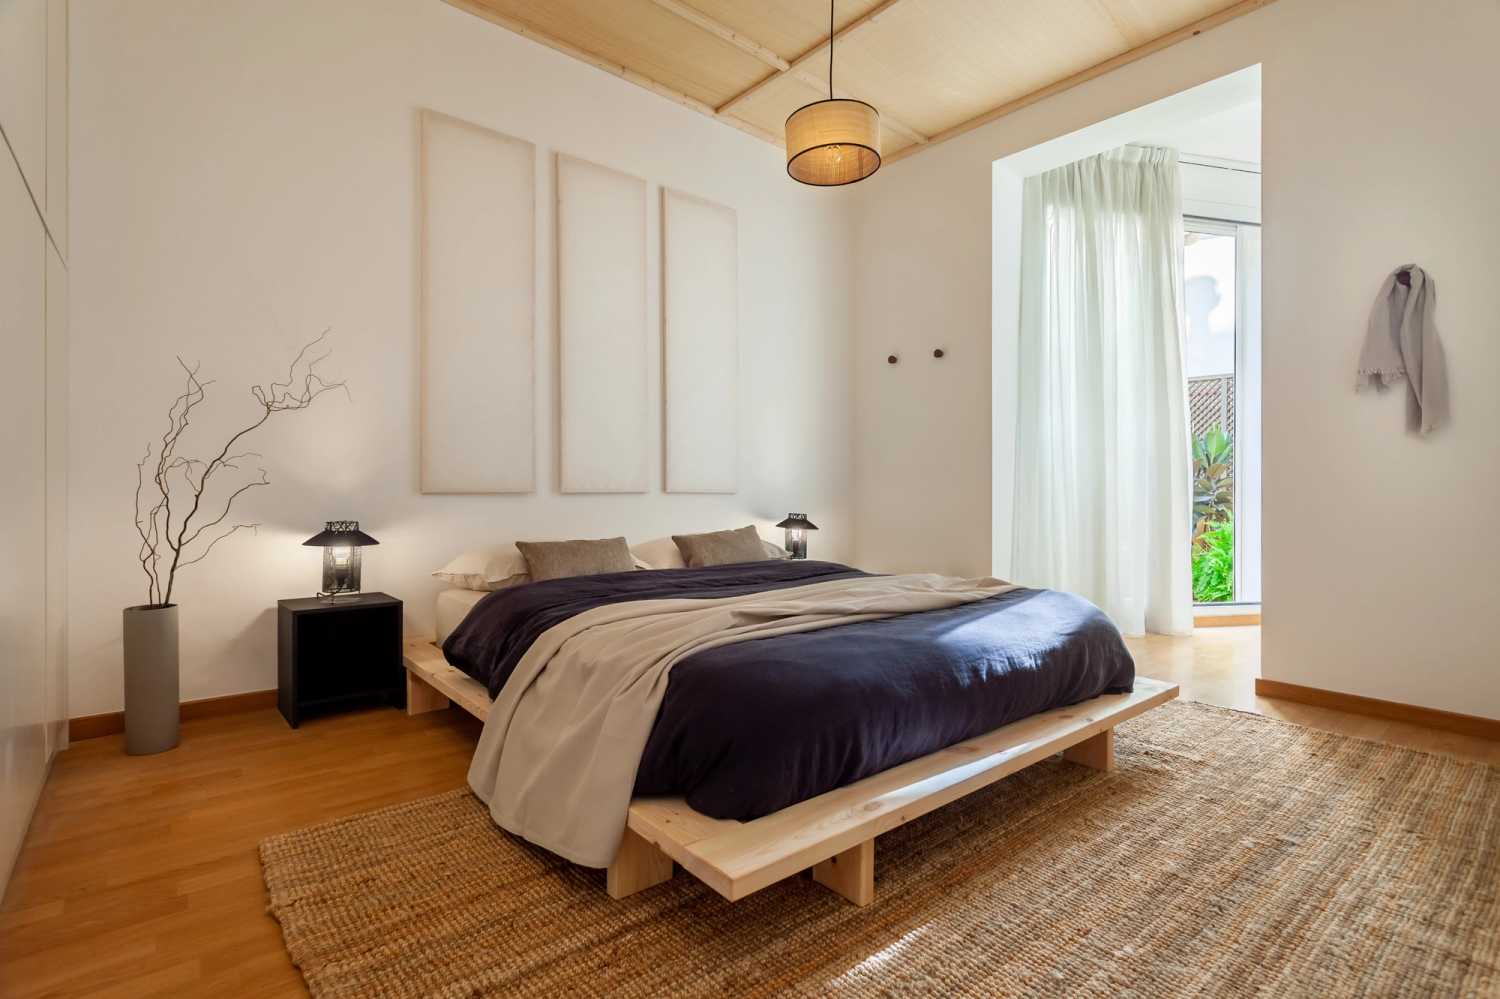 1653911477-ukio-barcelona-japanese-inspiration-bedroom-in-apartment-to-rent.jpg